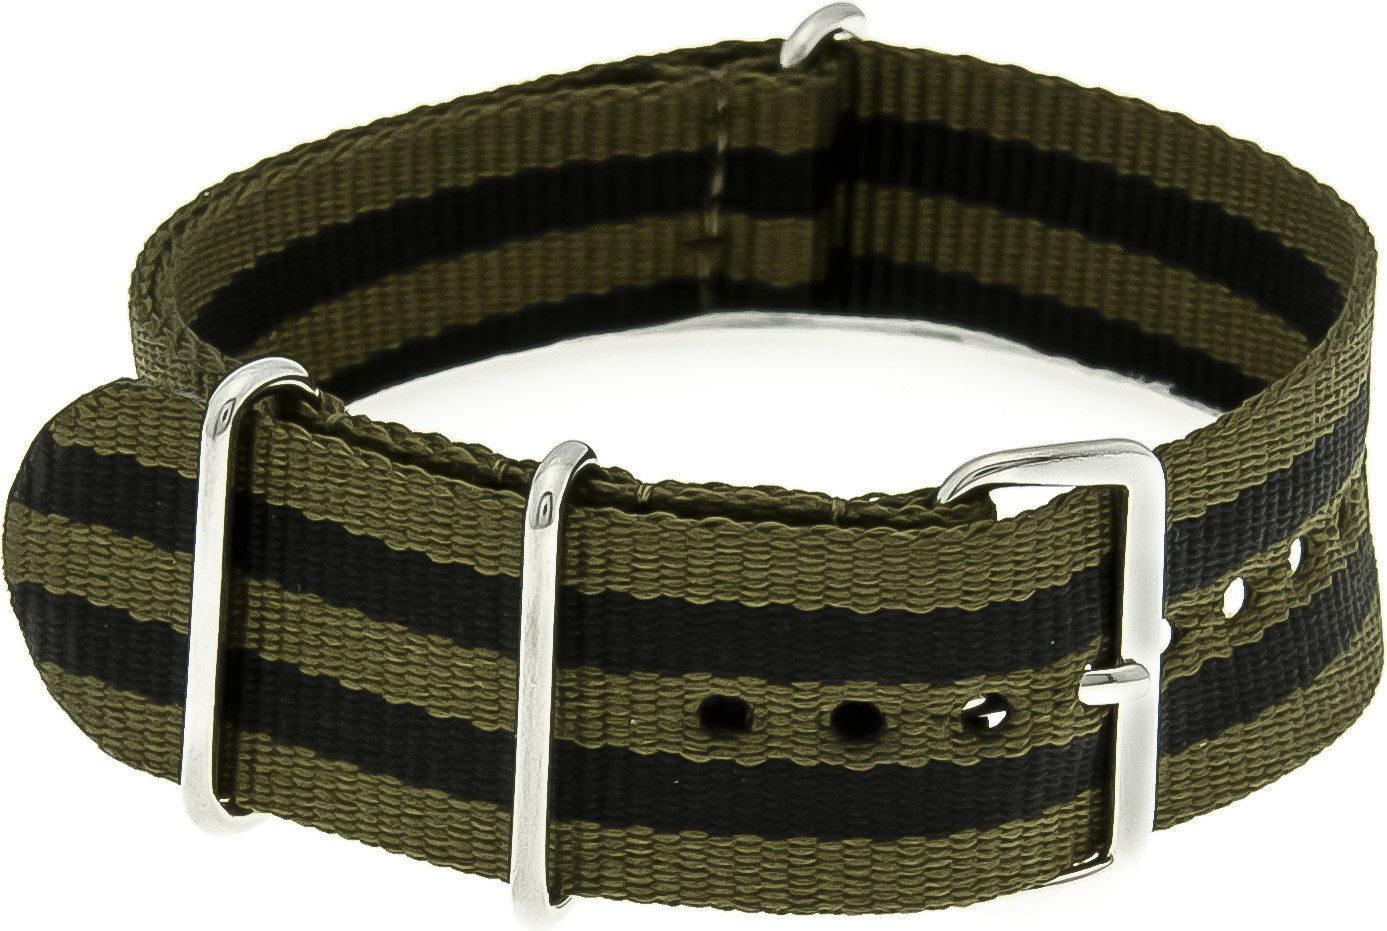  Nylon Uhrenarmband Militär dunkelgrün-schwarz 